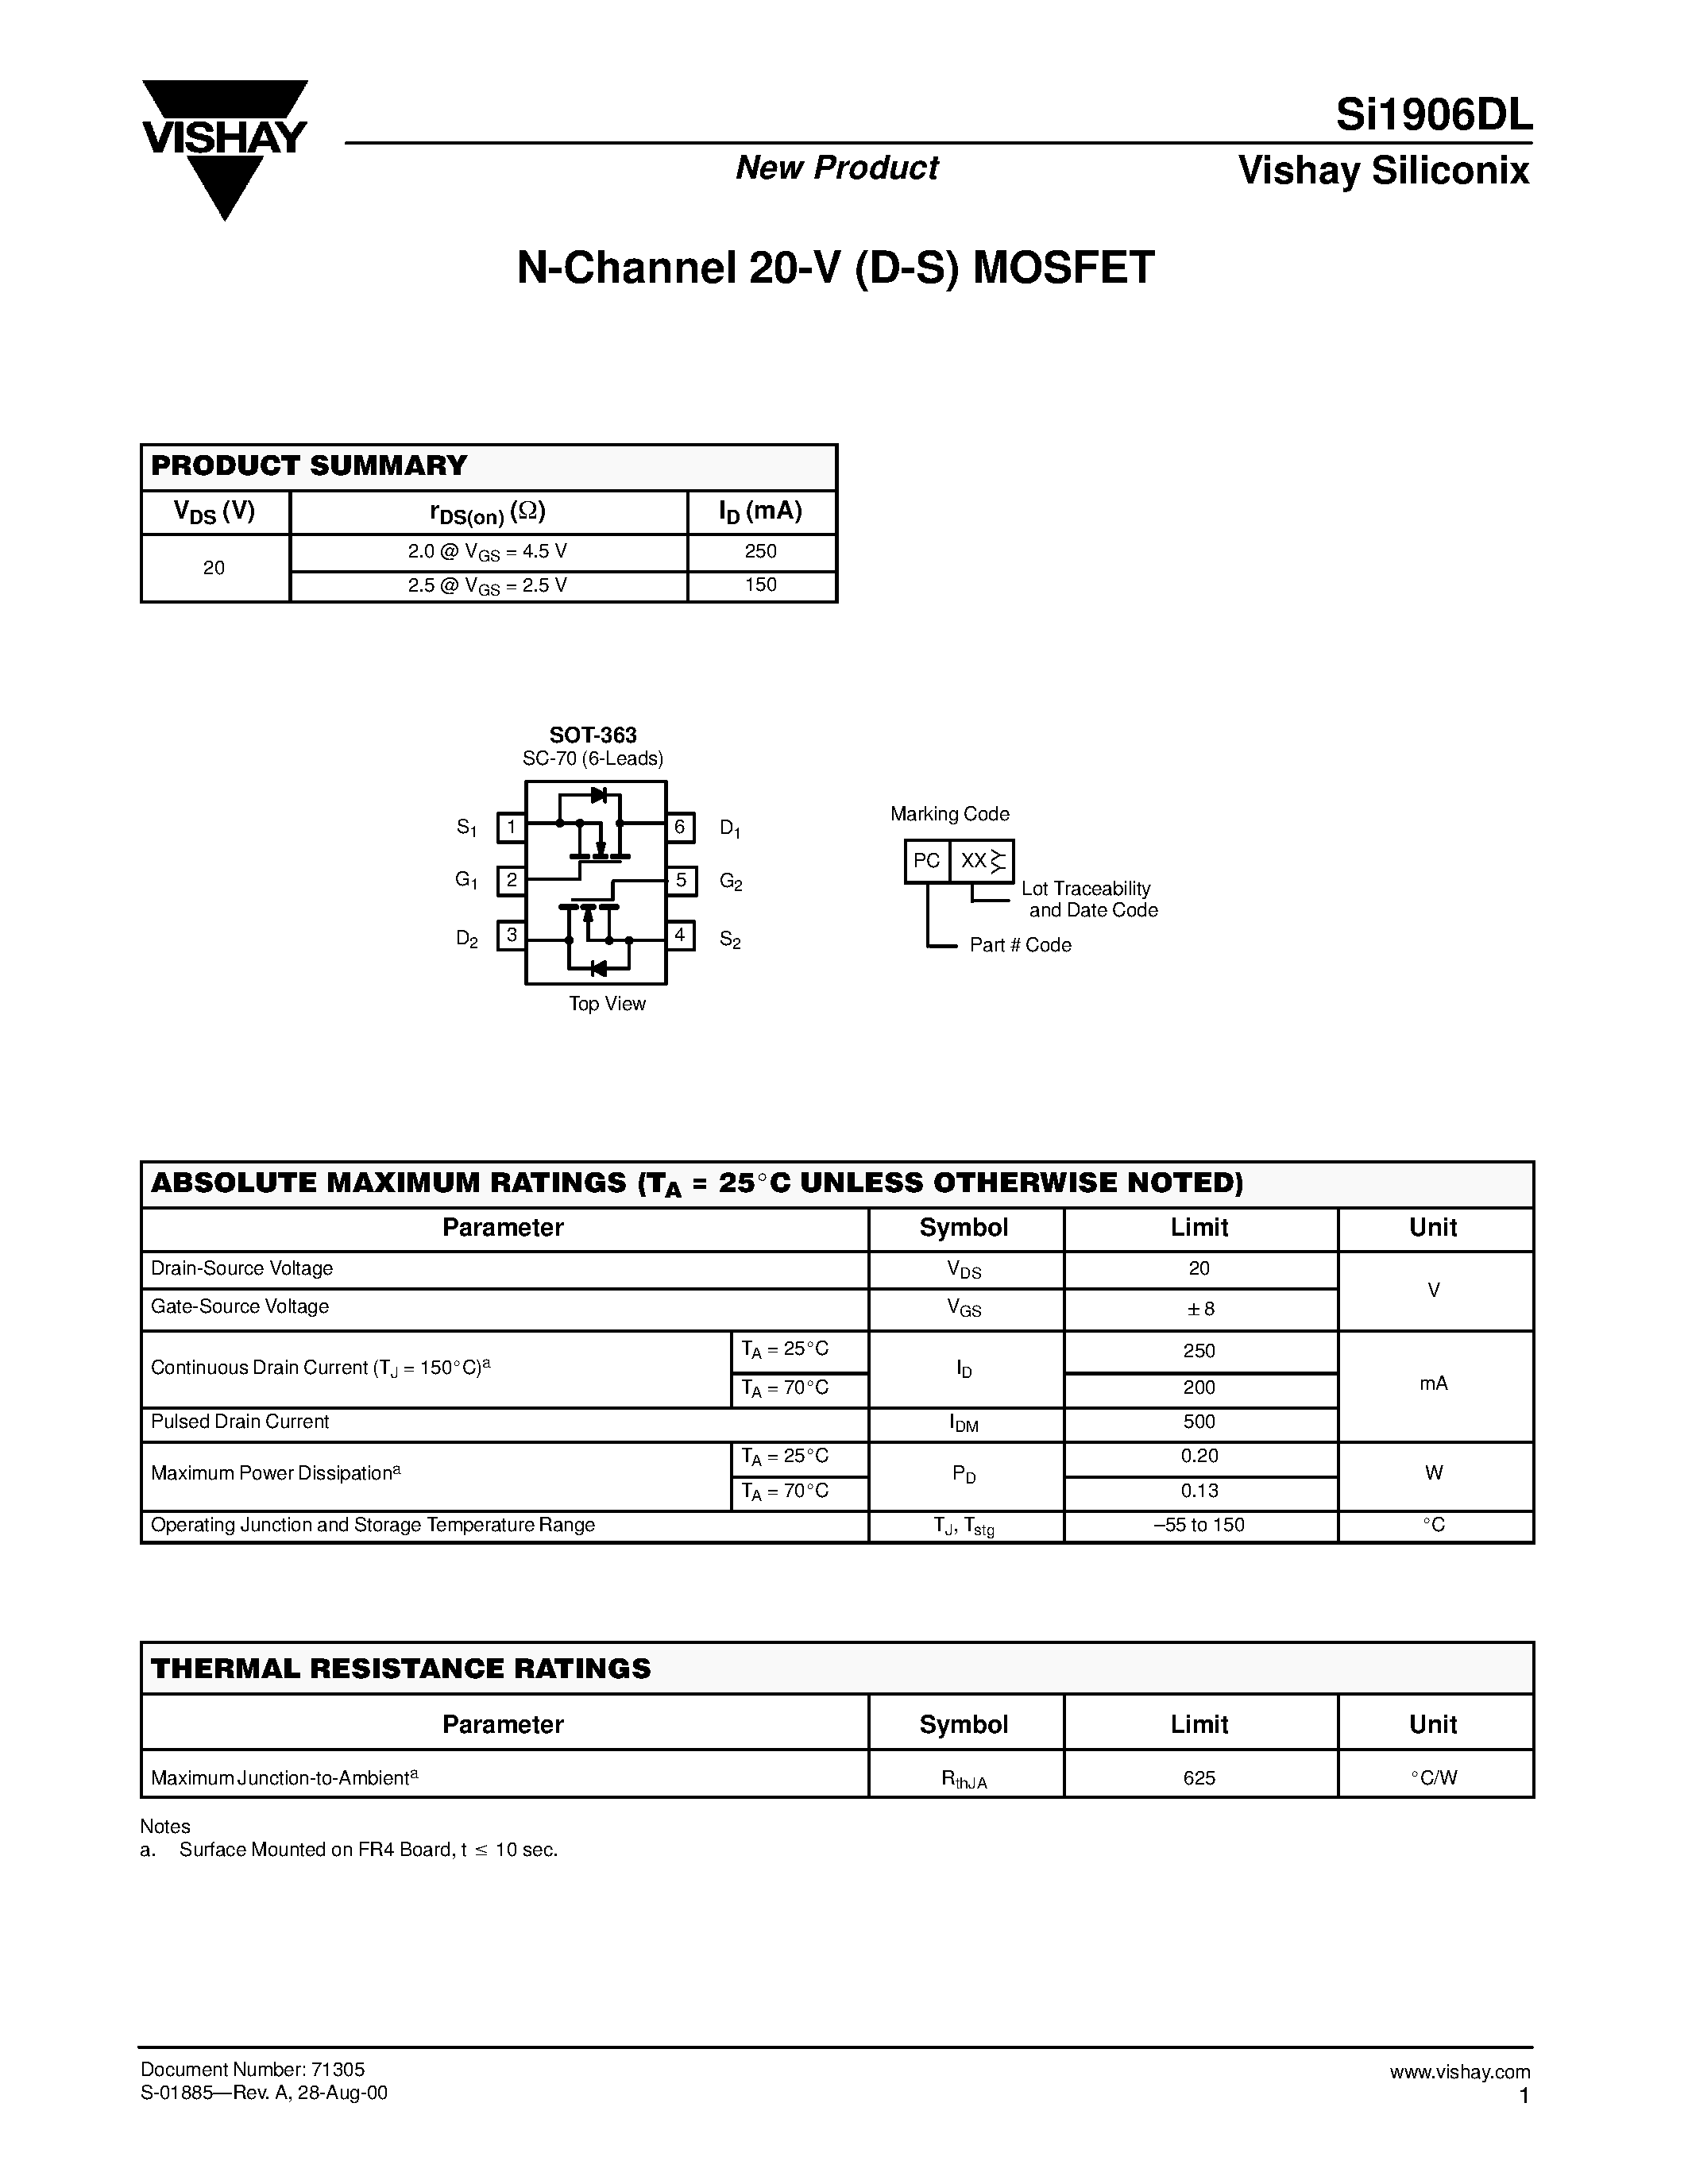 Даташит SI1906DL - N-Channel 20-V (D-S) MOSFET страница 1